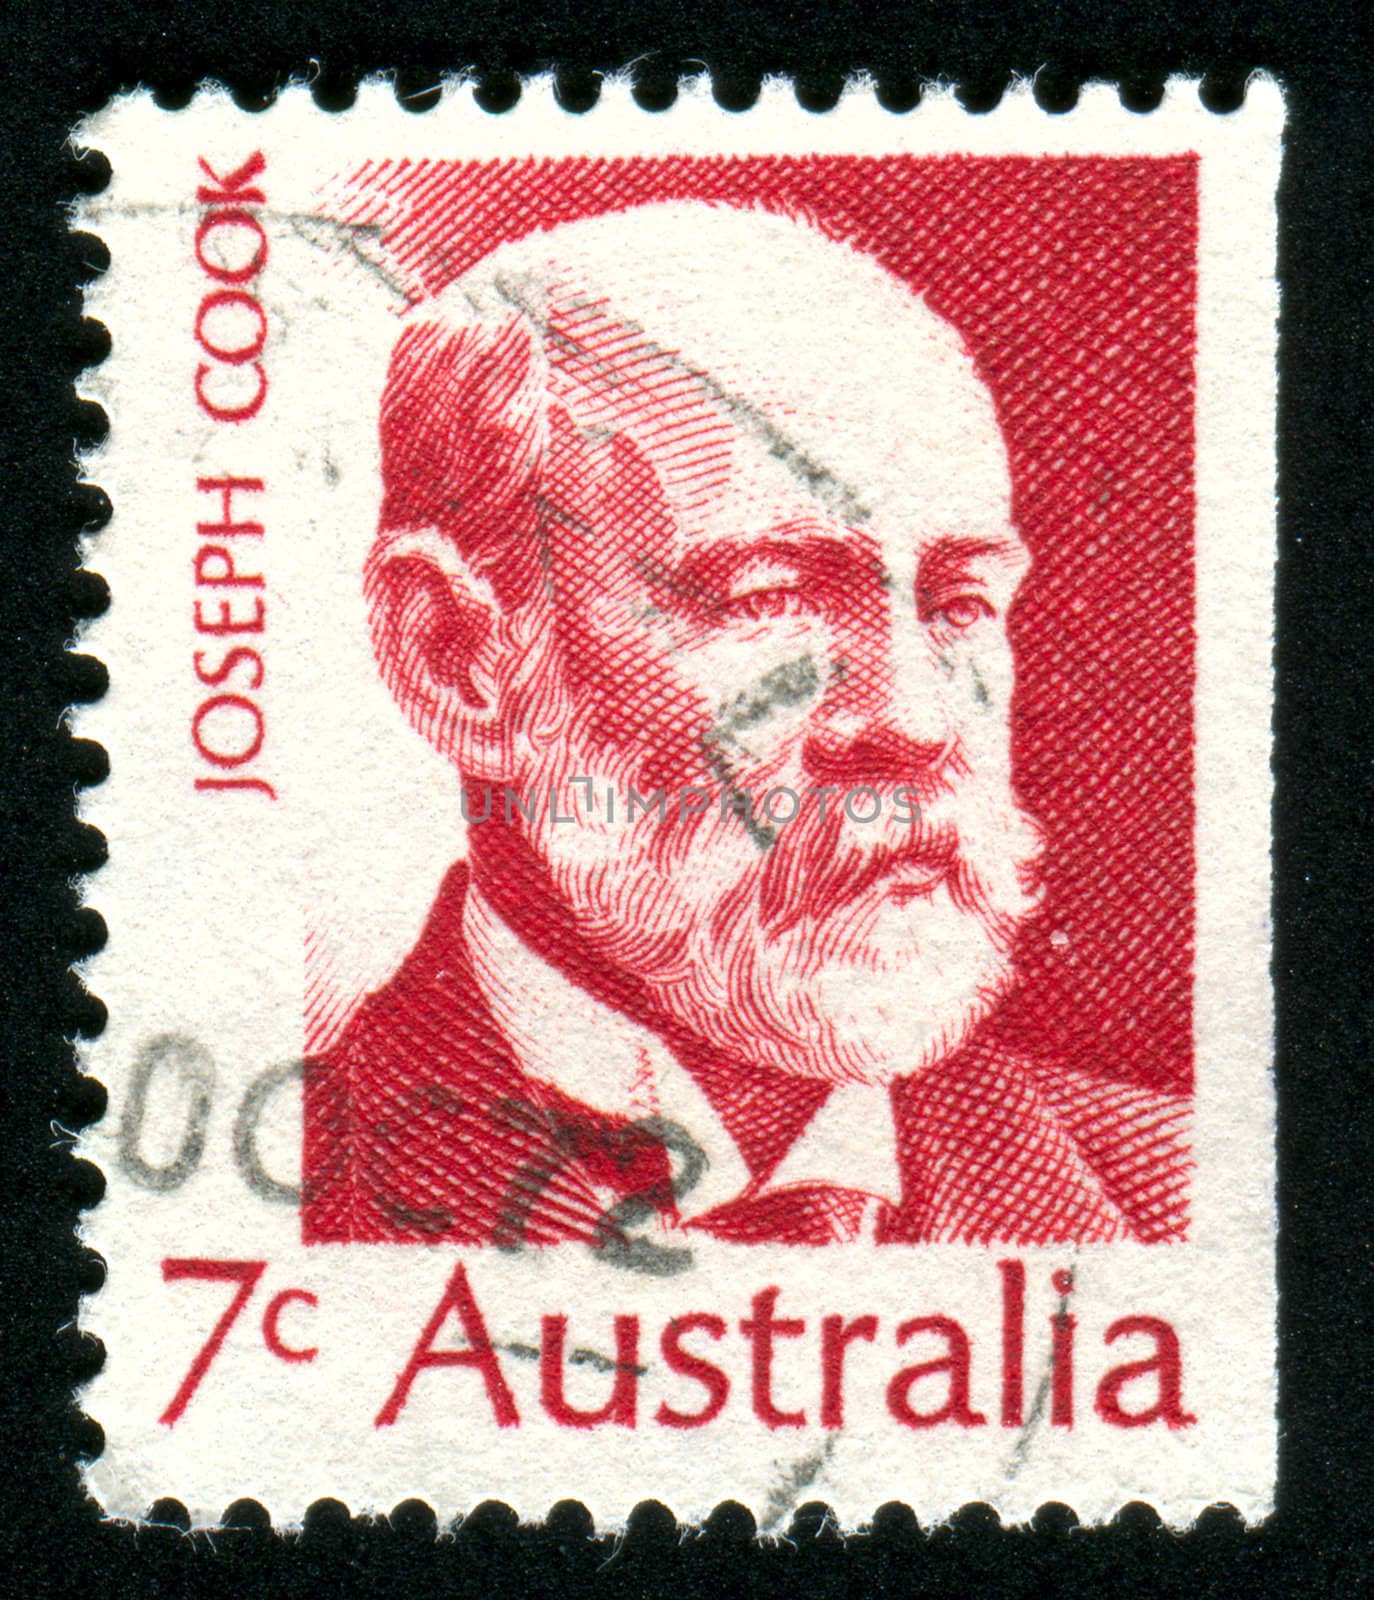 AUSTRALIA - CIRCA 1971: stamp printed by Australia, shows Joseph Cook, circa 1971